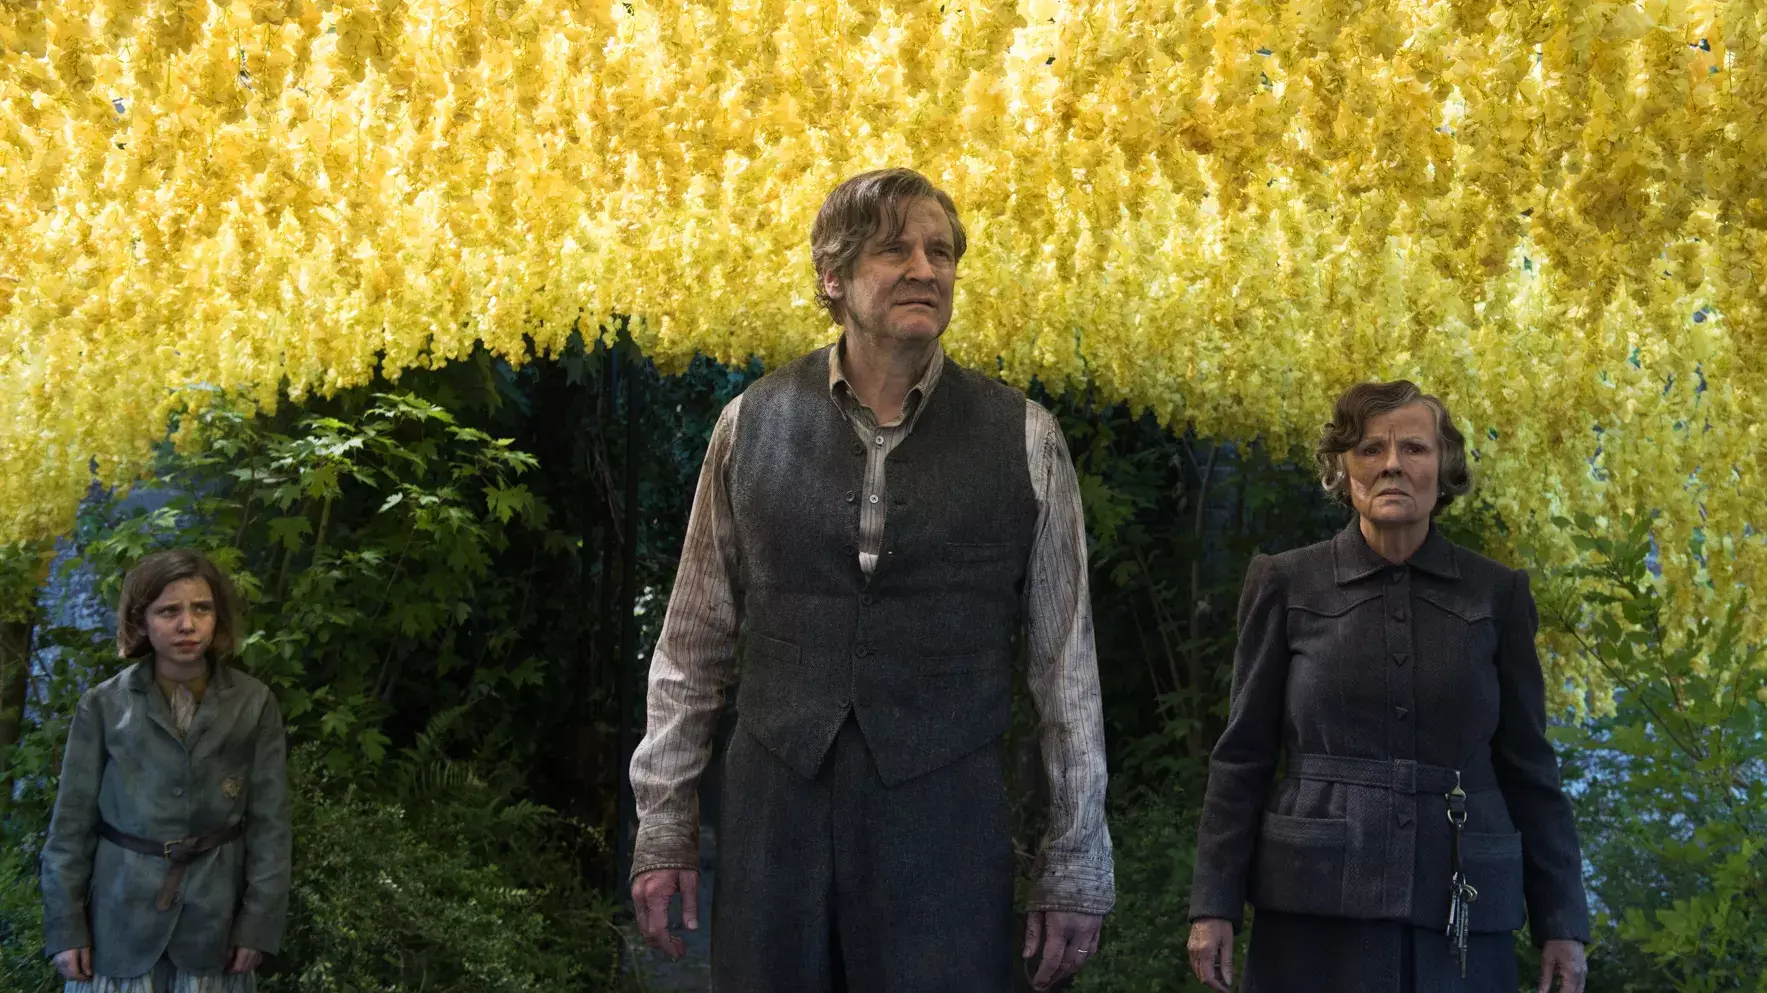 The Secret Garden Remake Starring Colin Firth And Julie Walters Lands Next Week